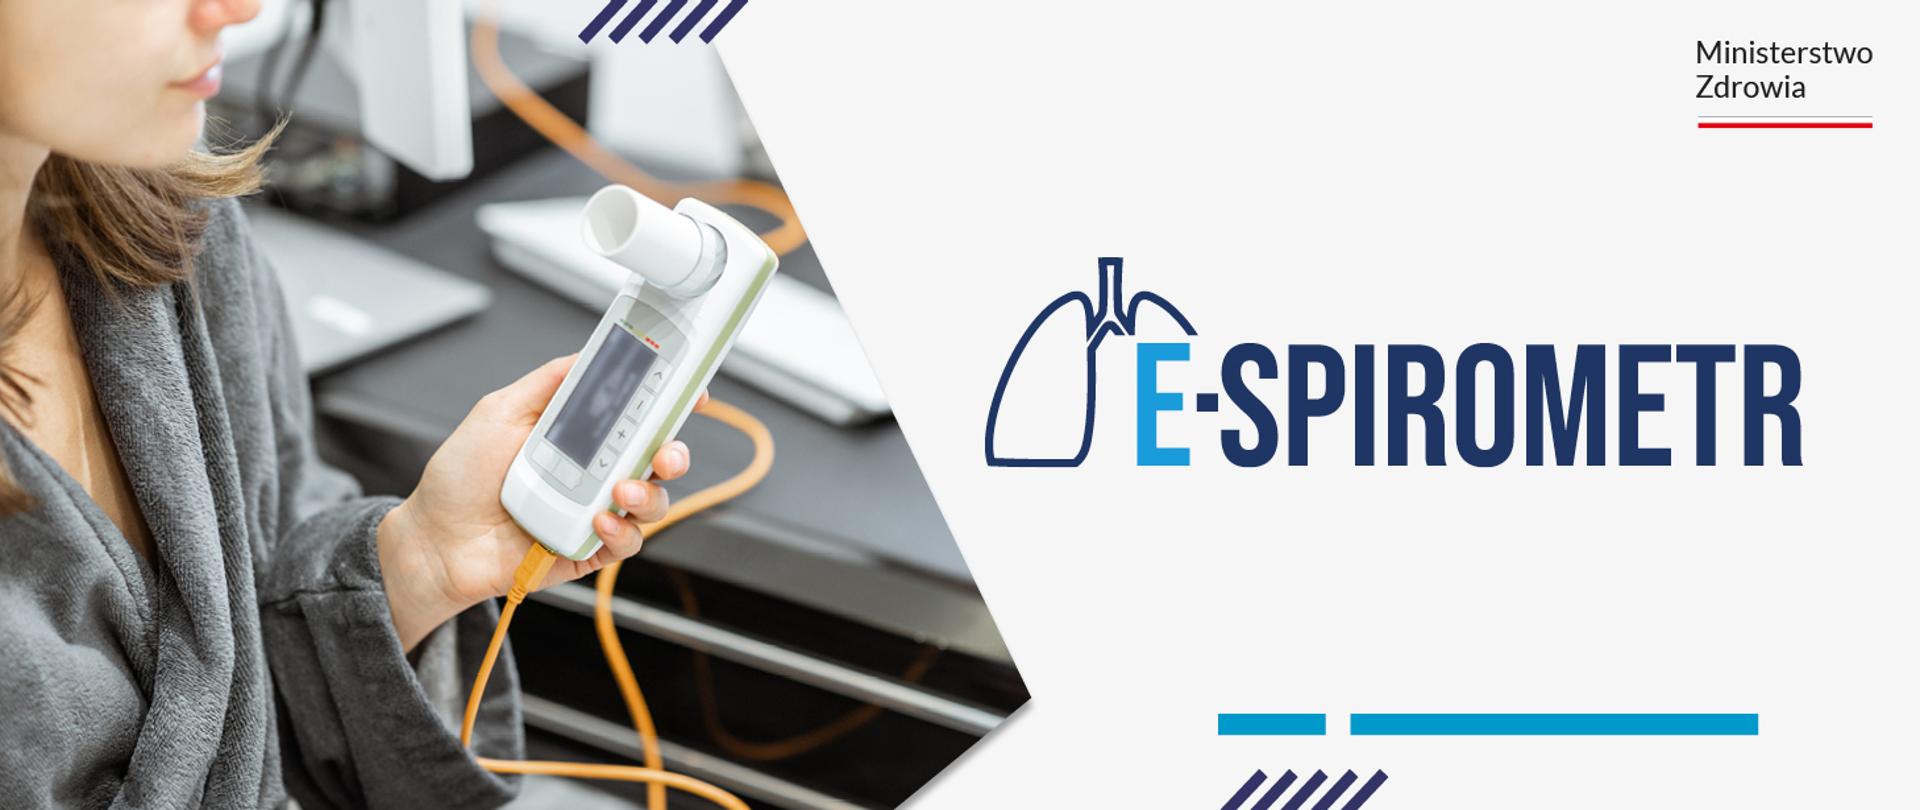 e-spirometr - nowe logo MZ